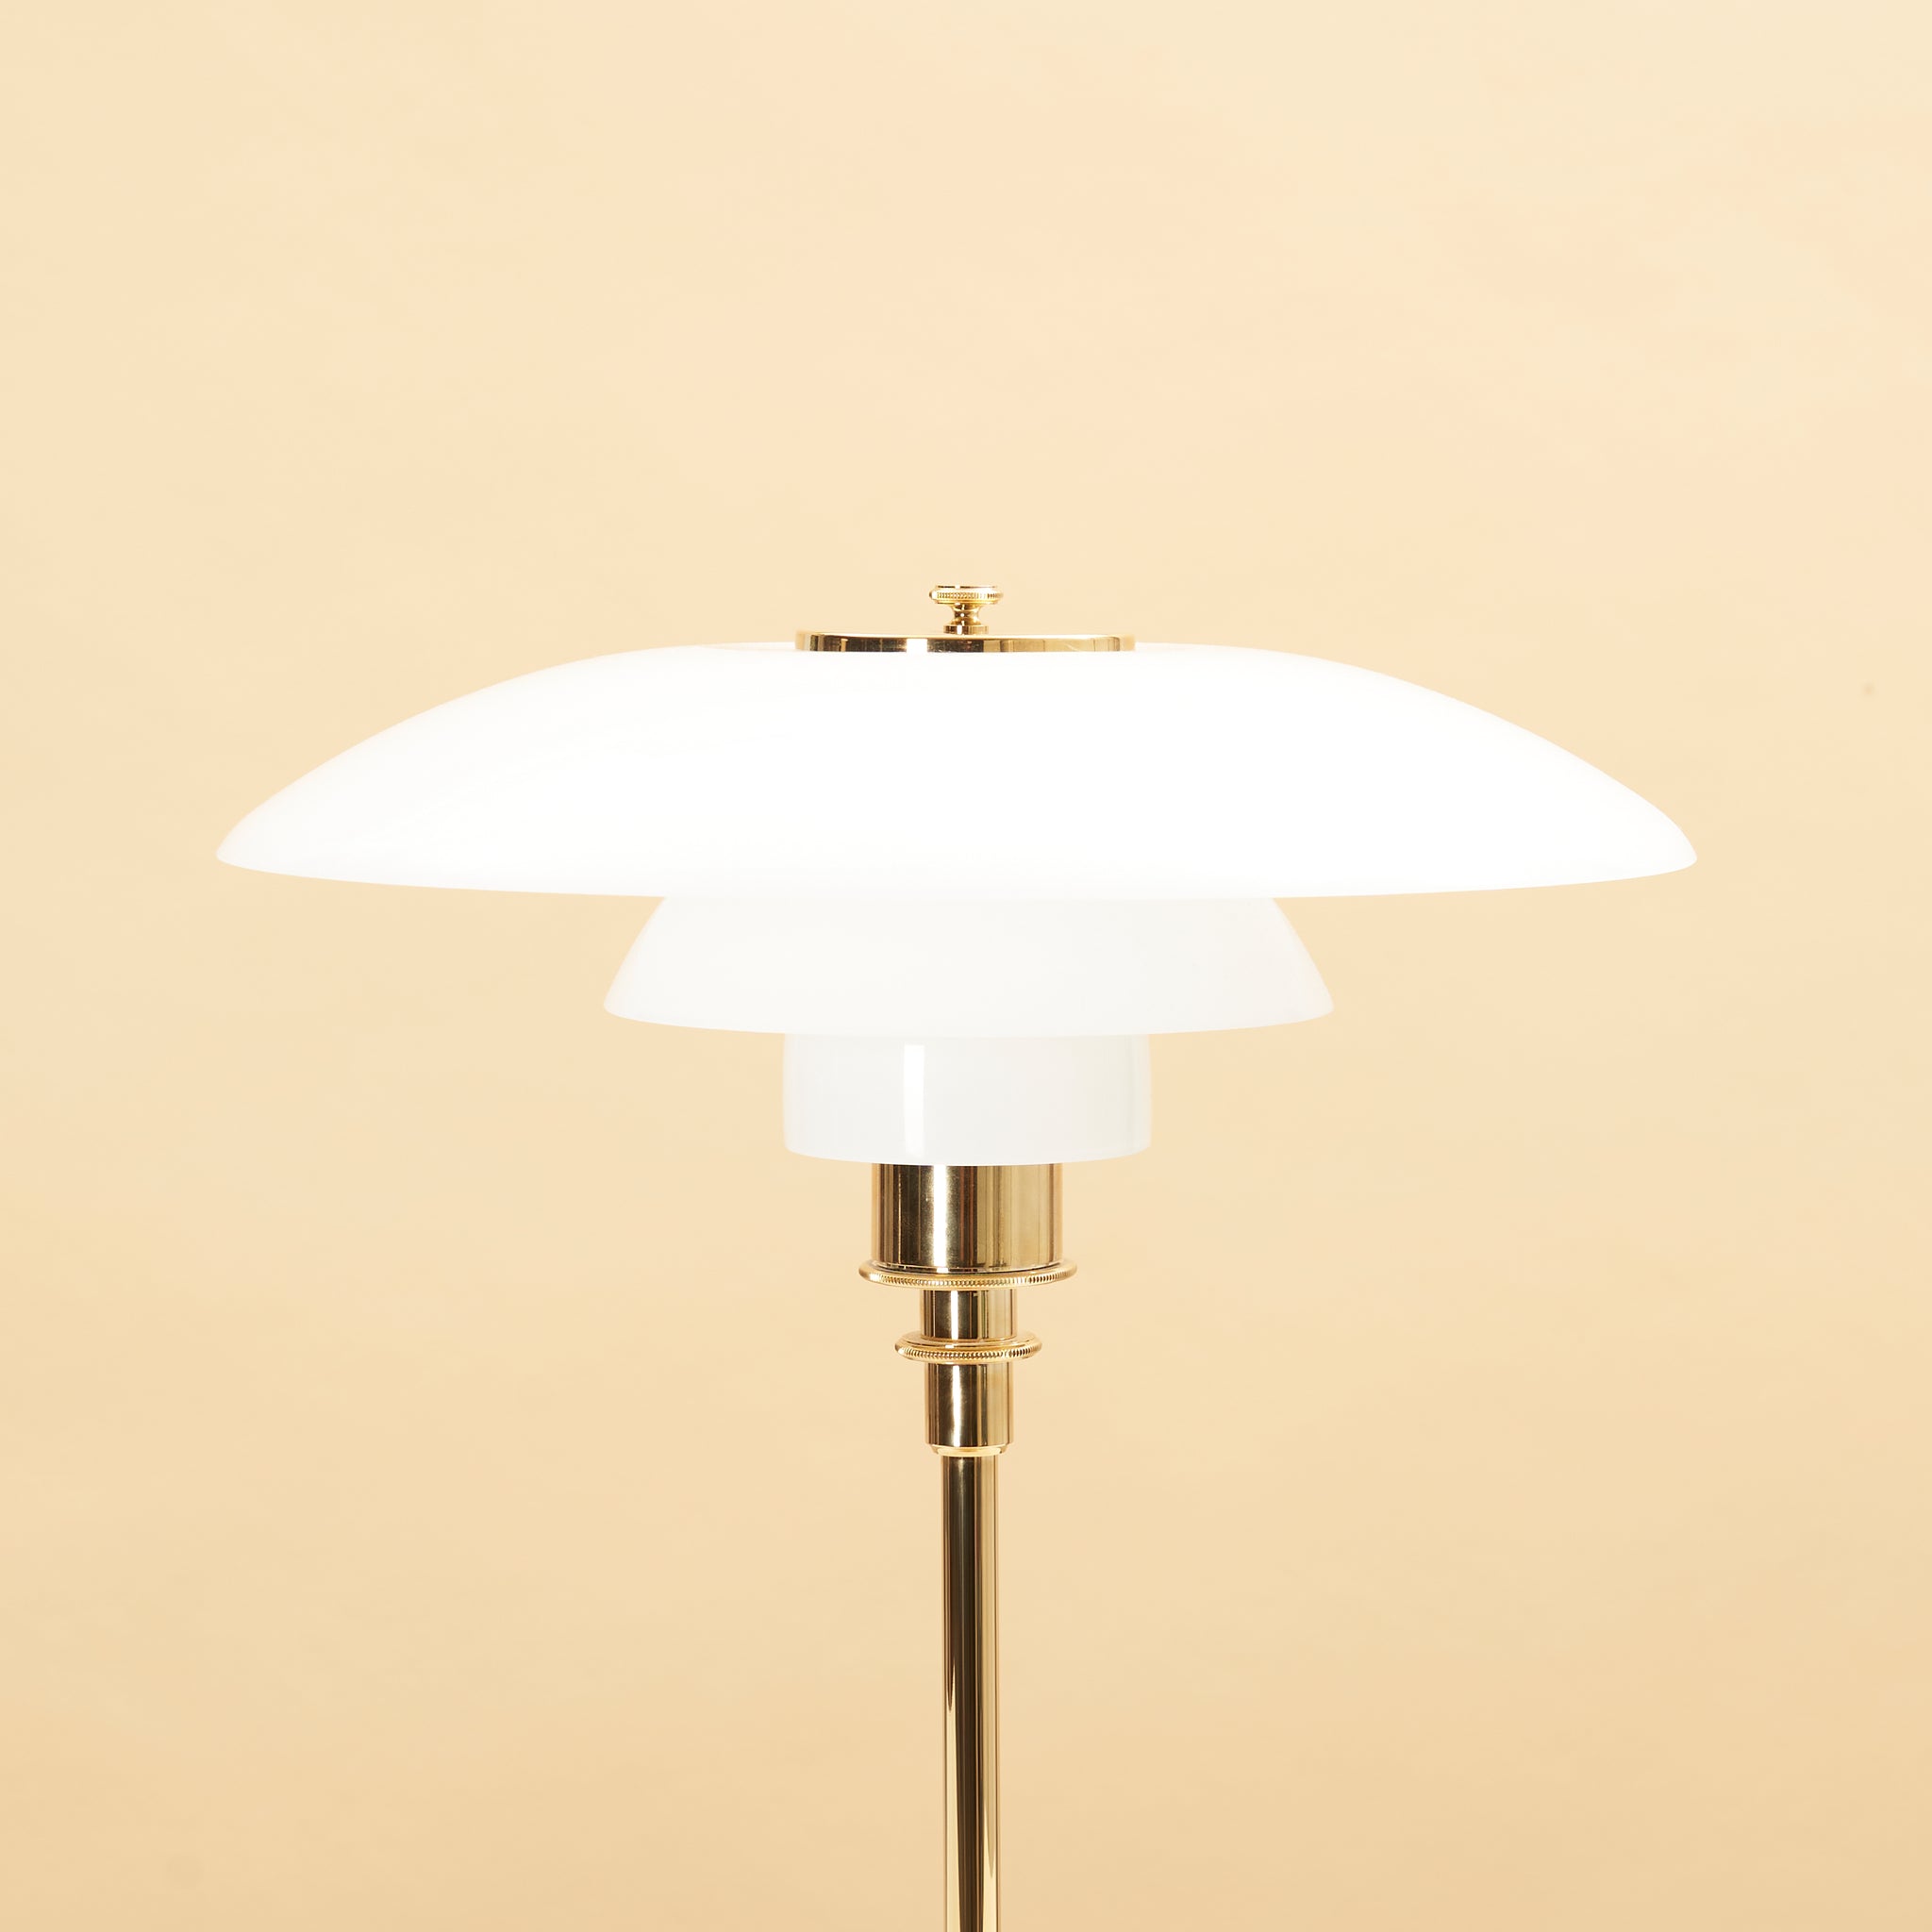 'PH 3/2' Table Lamp by Poul Henningsen for Louis Poulsen. Brass Frosted Glass Vintage lighting. Danish design. Mid-century modern. Scandinavian modern.